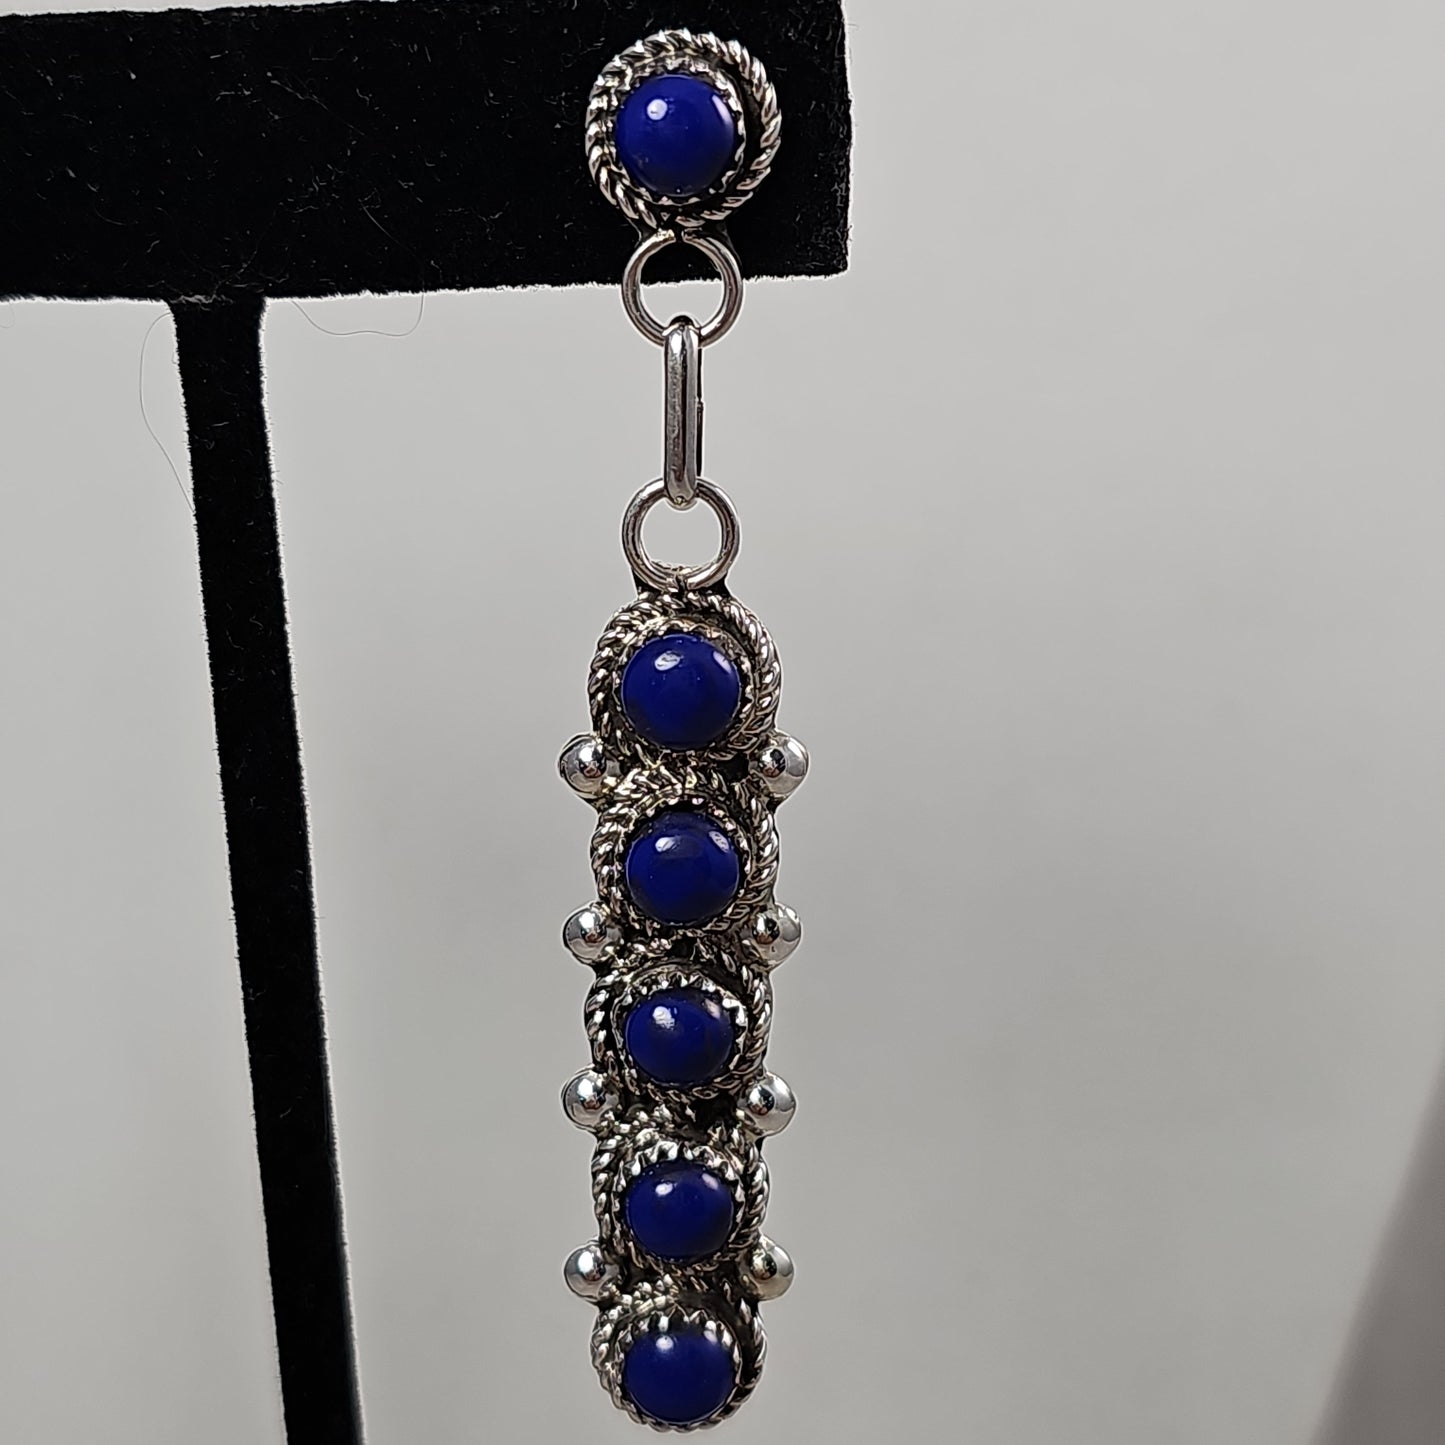 Lapis & sterling earrings